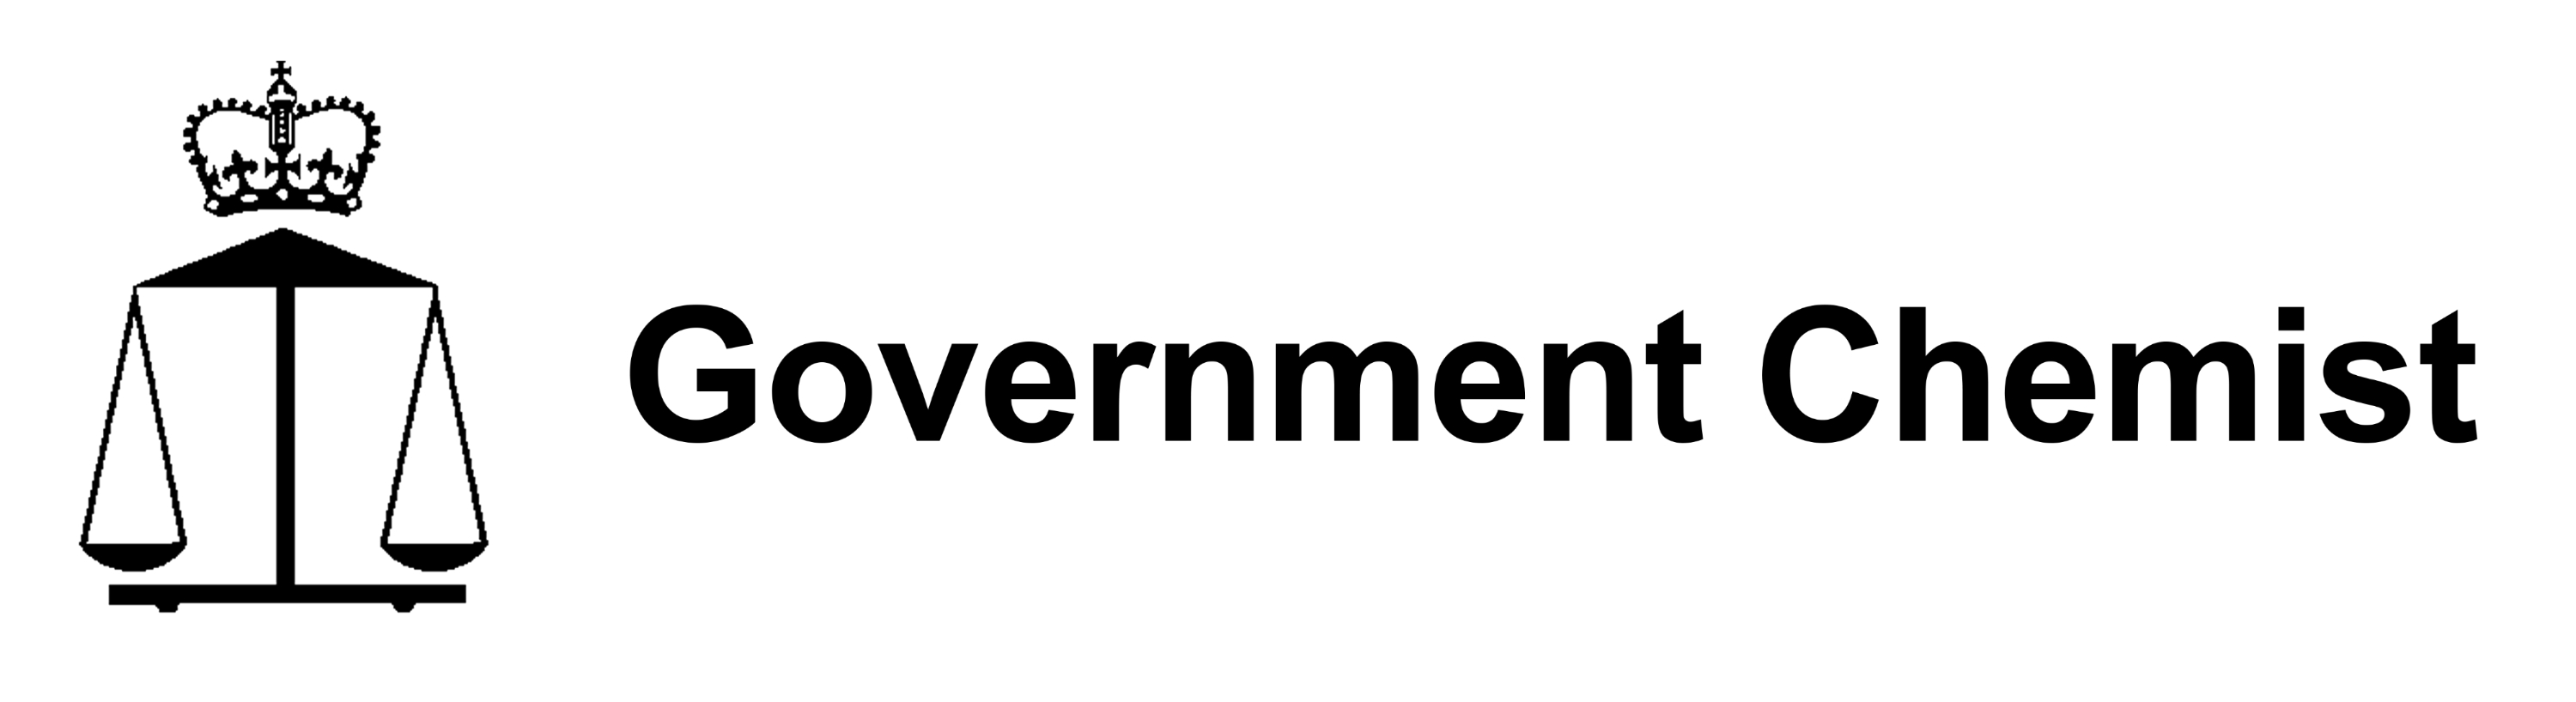 Image result for government chemist logo